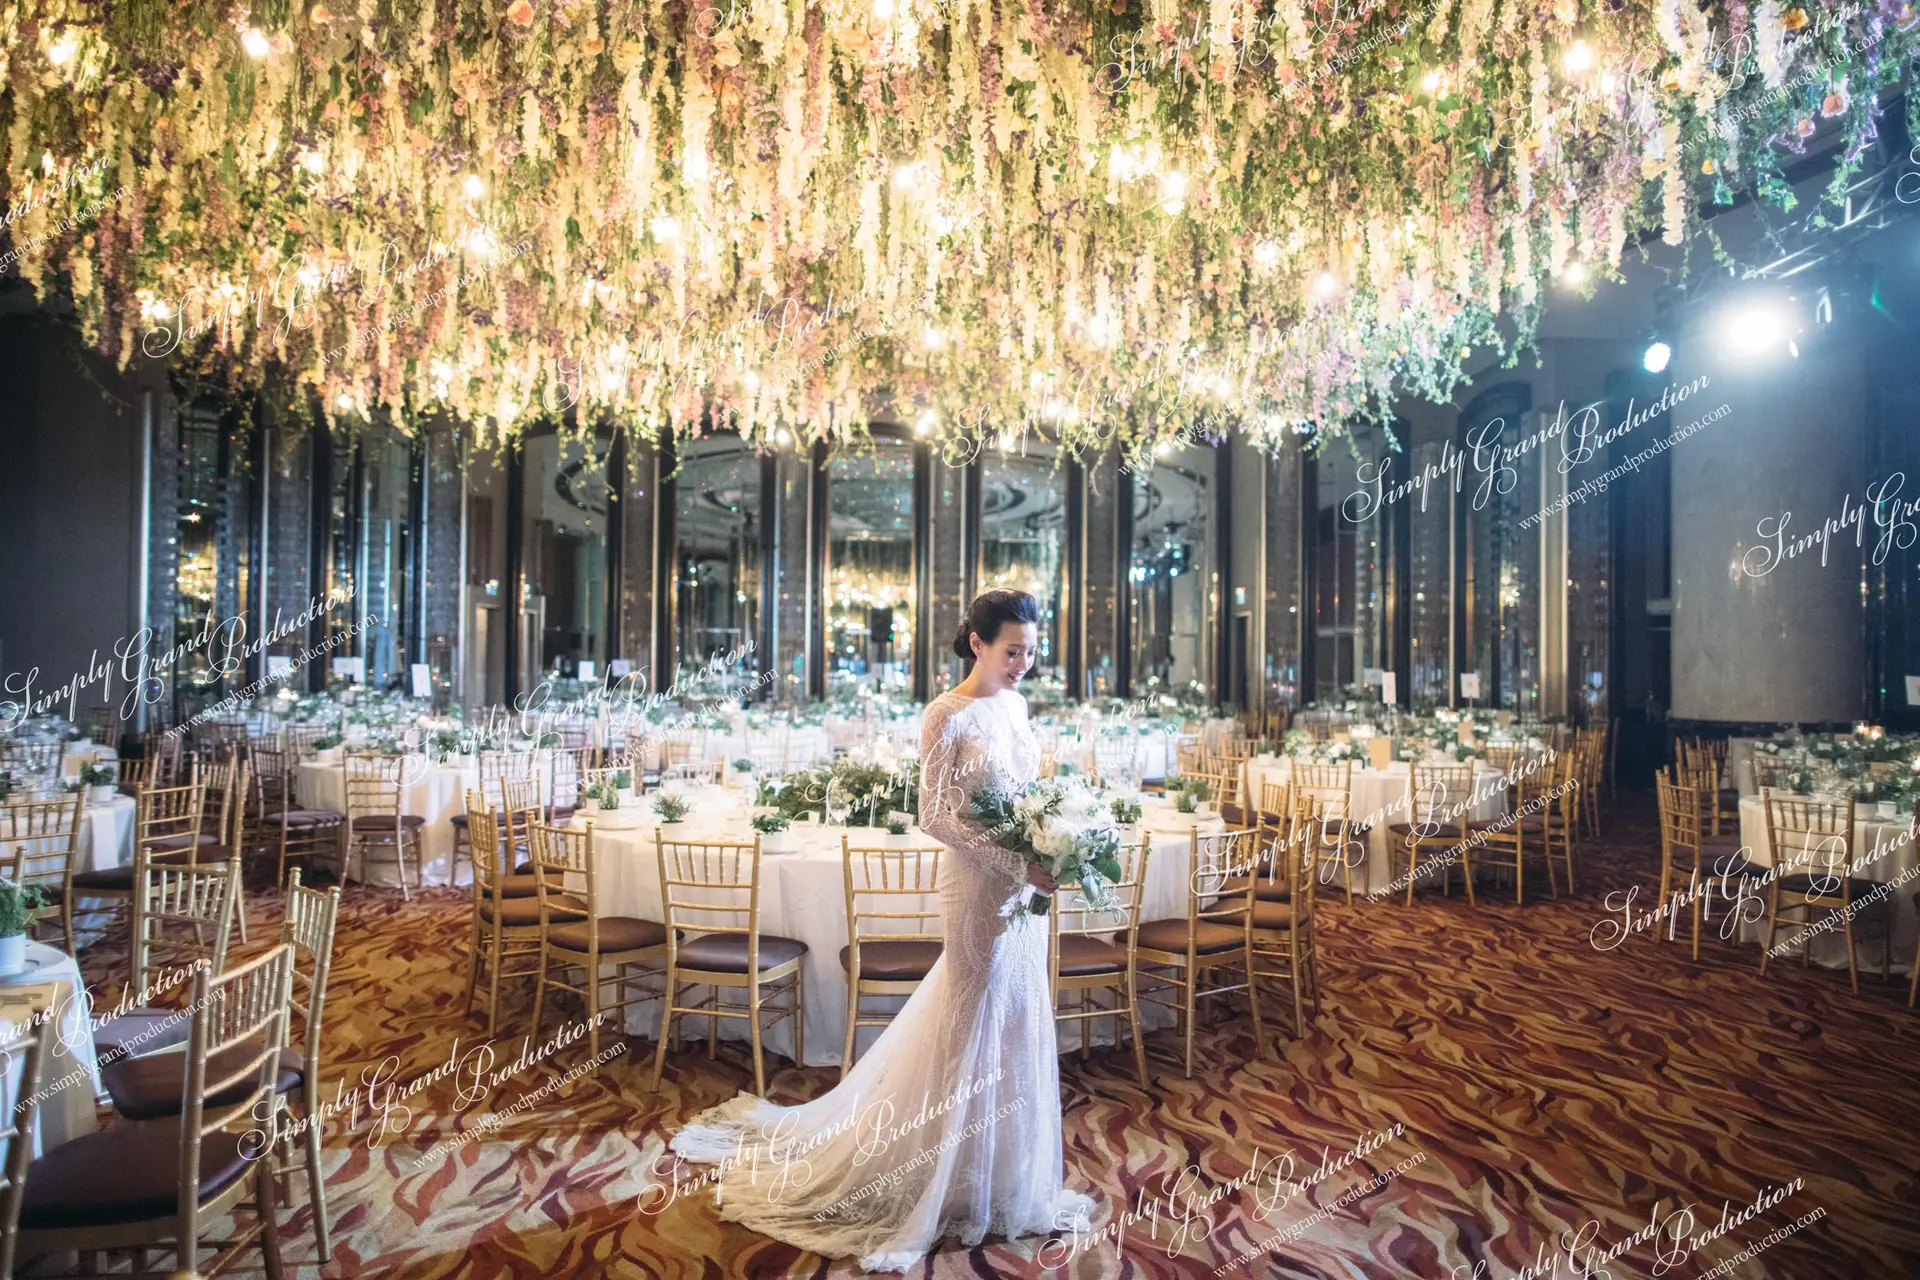 Simply_Grand_Production_Ballroom_wedding_decoration_hanging_installation_floral_light_bride_gown_bigday_romantic_Grand_Hyatt_2_14_wm